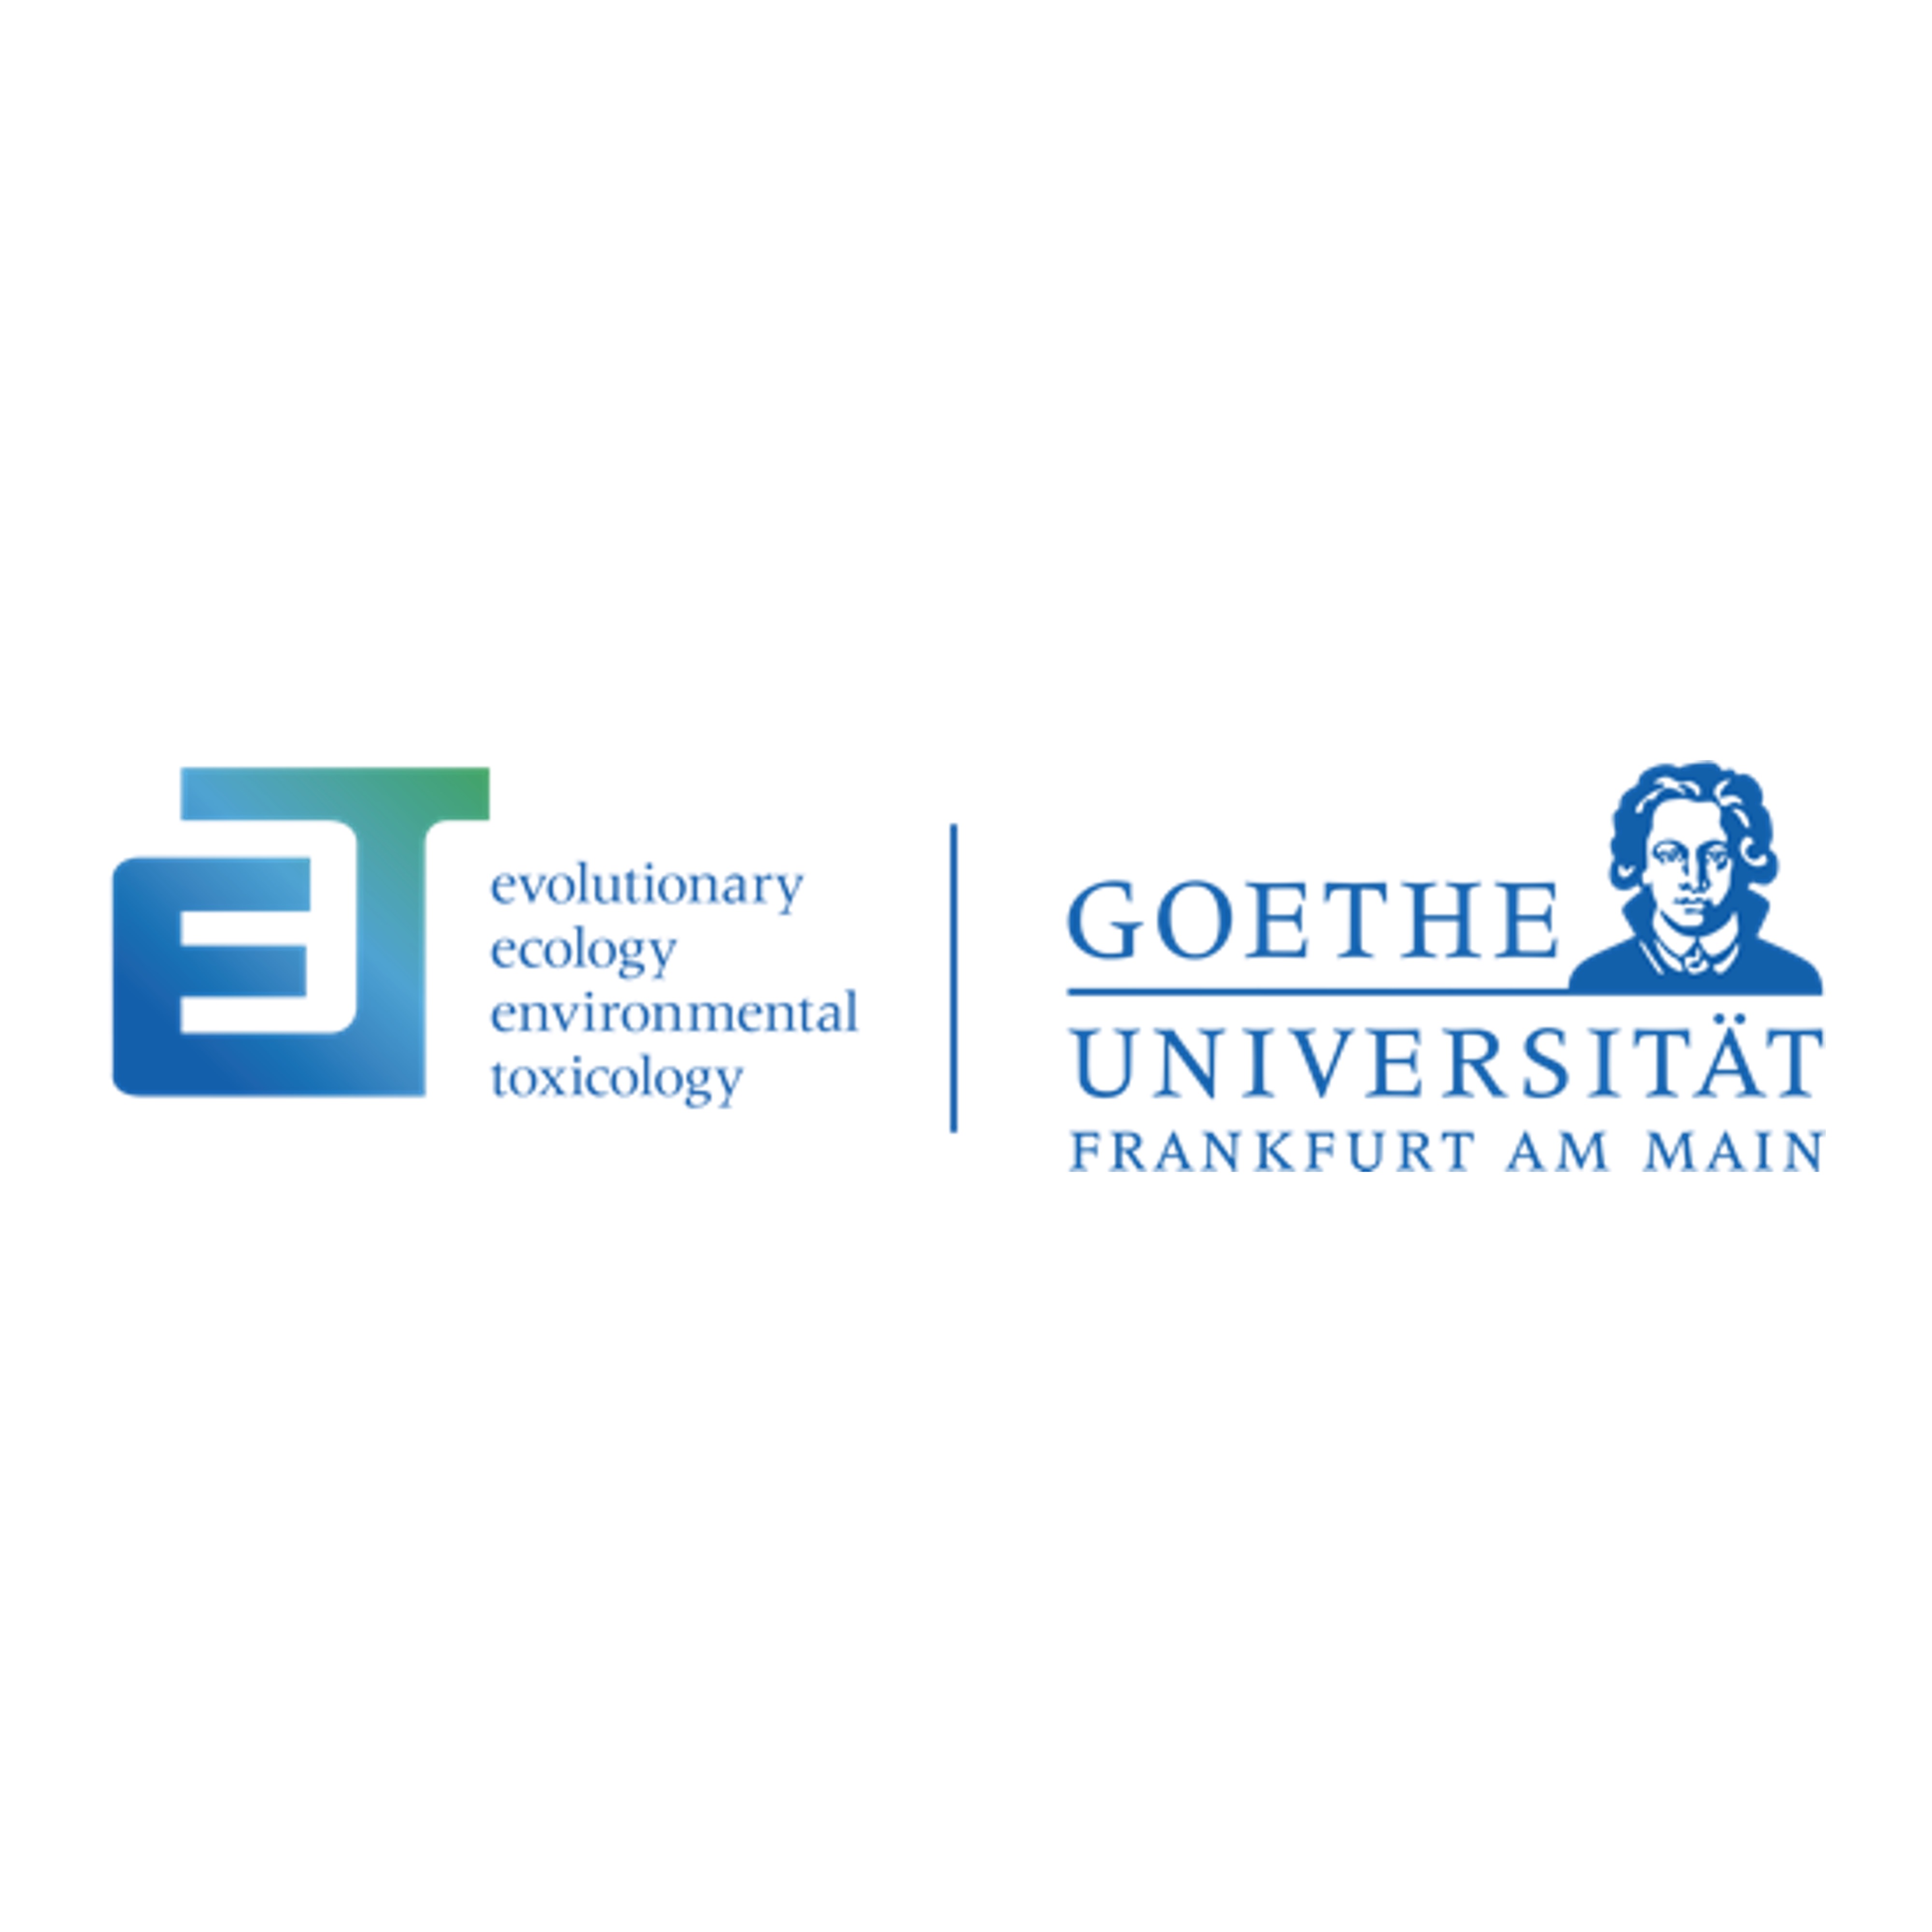 Goethe-Universität Frankfurt am Main